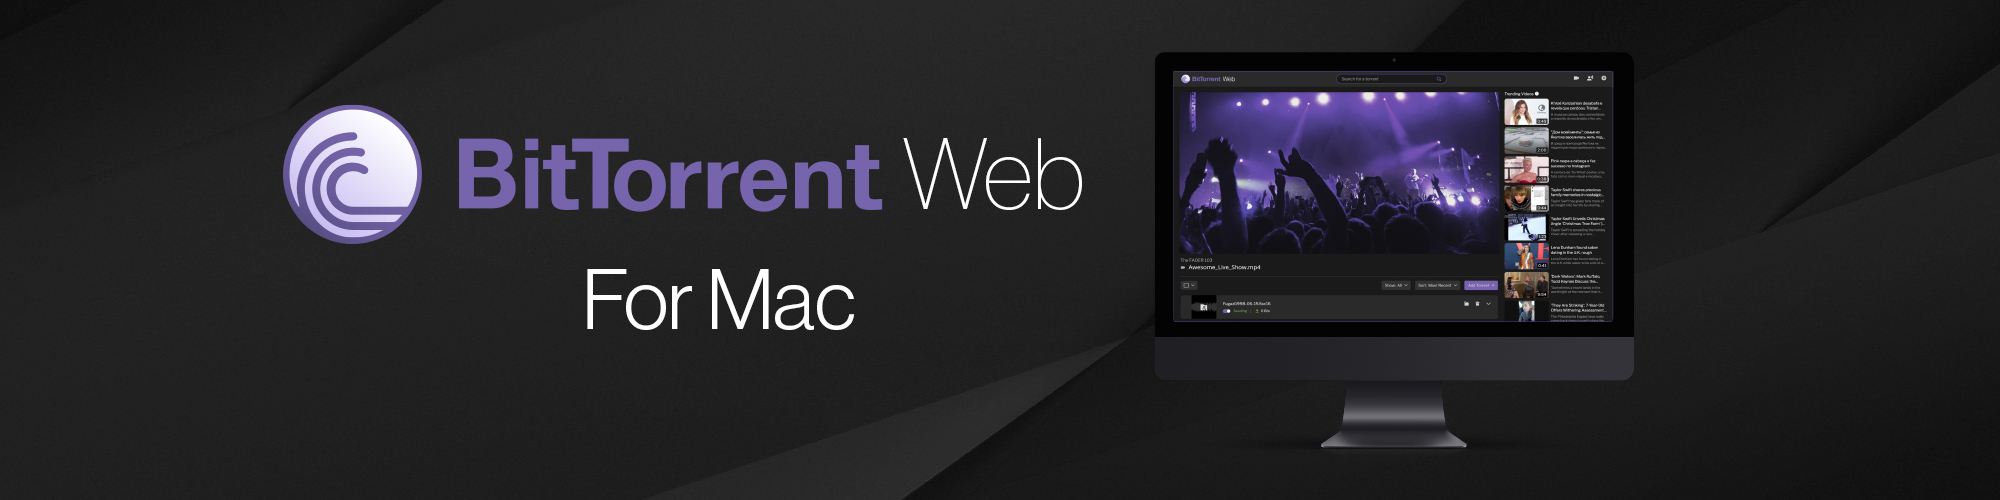 torrent app for mac